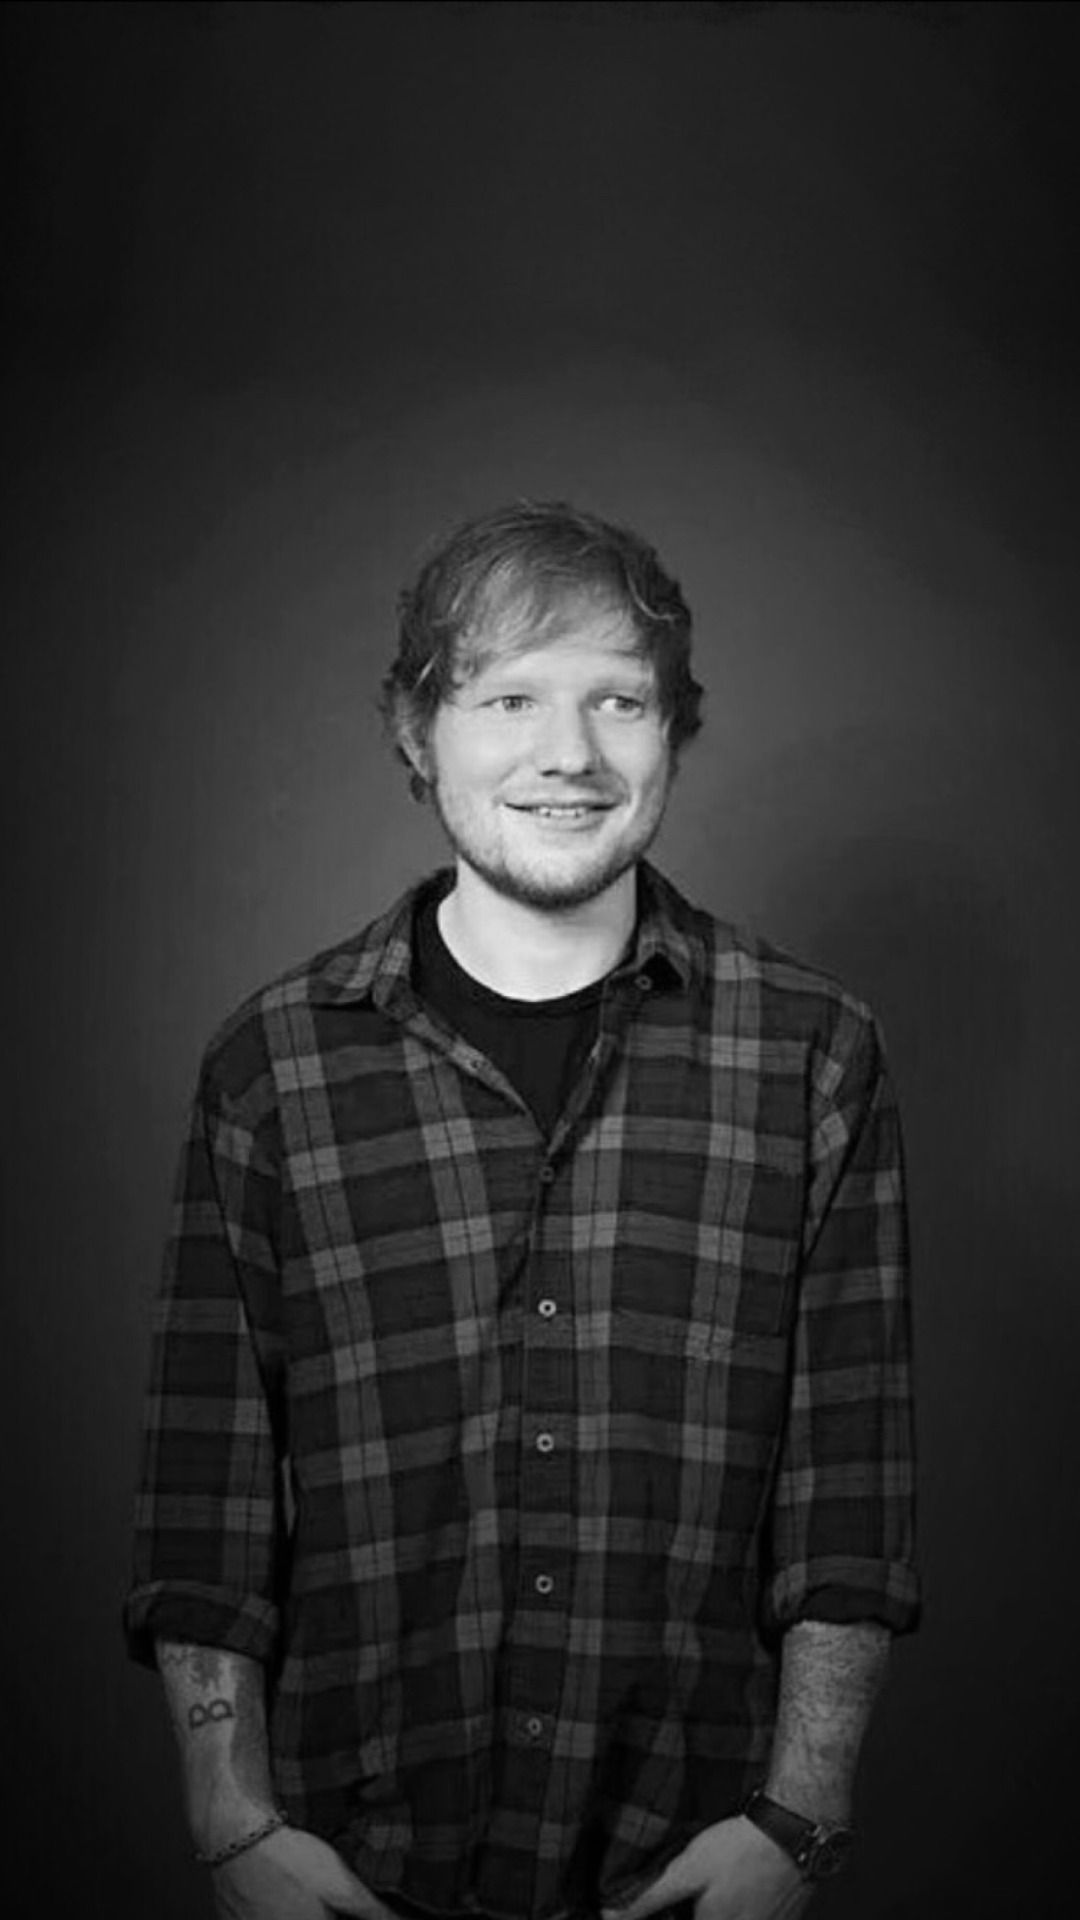 Ed Sheeran Wallpapers Ed Sheeran wallpaper / lock screen. Sized for